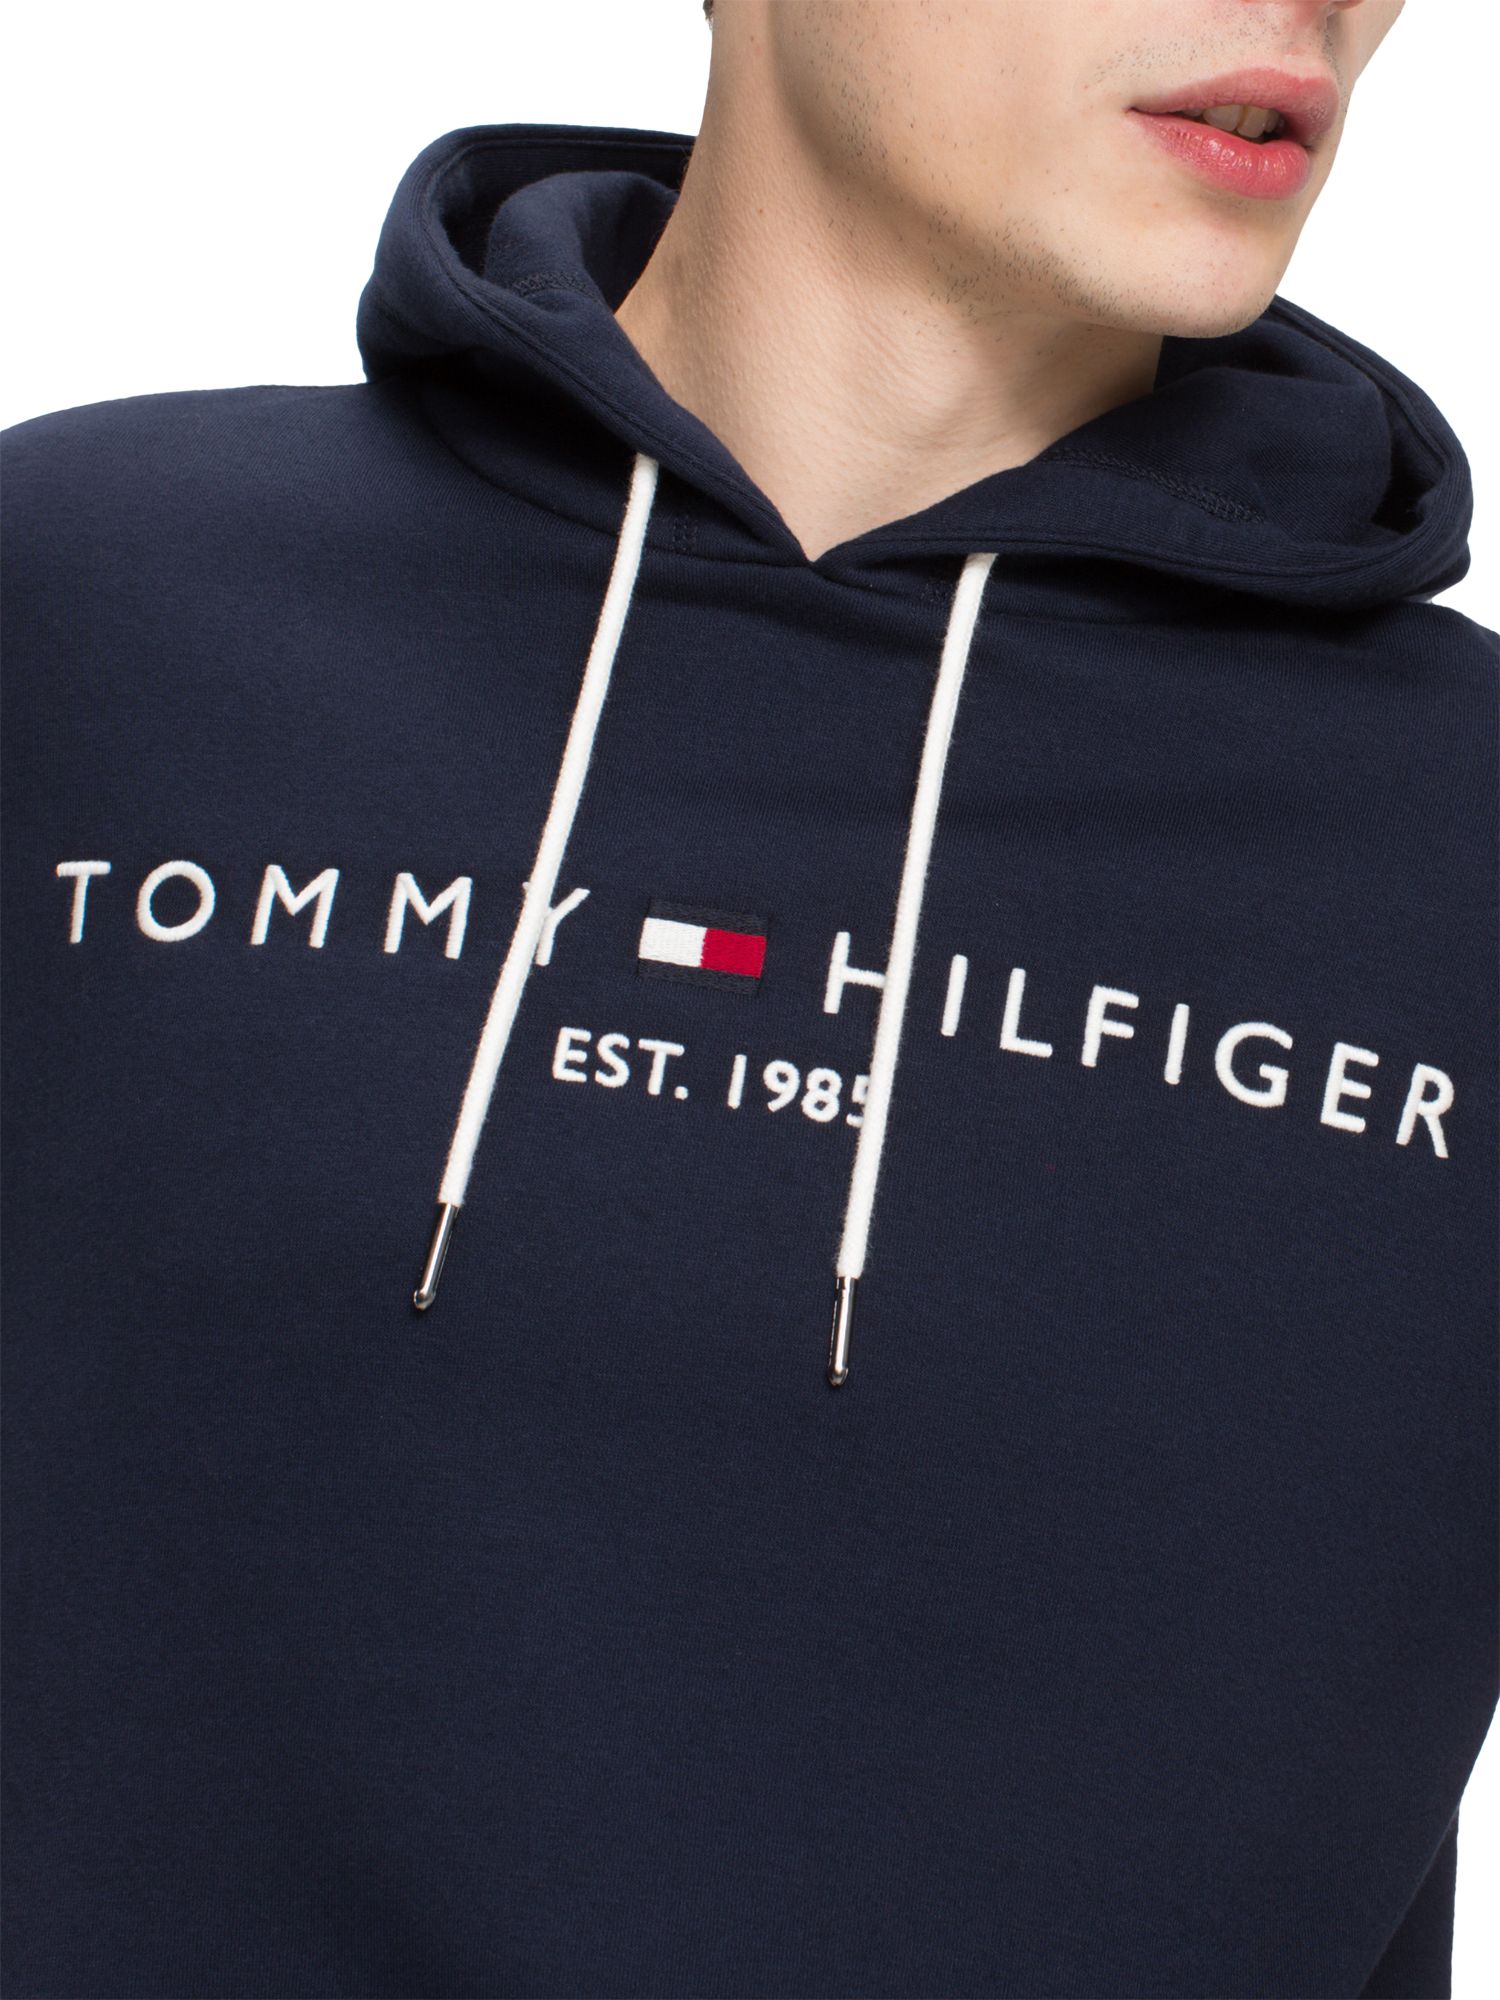 tommy hilfiger logo sleeve sweatshirt